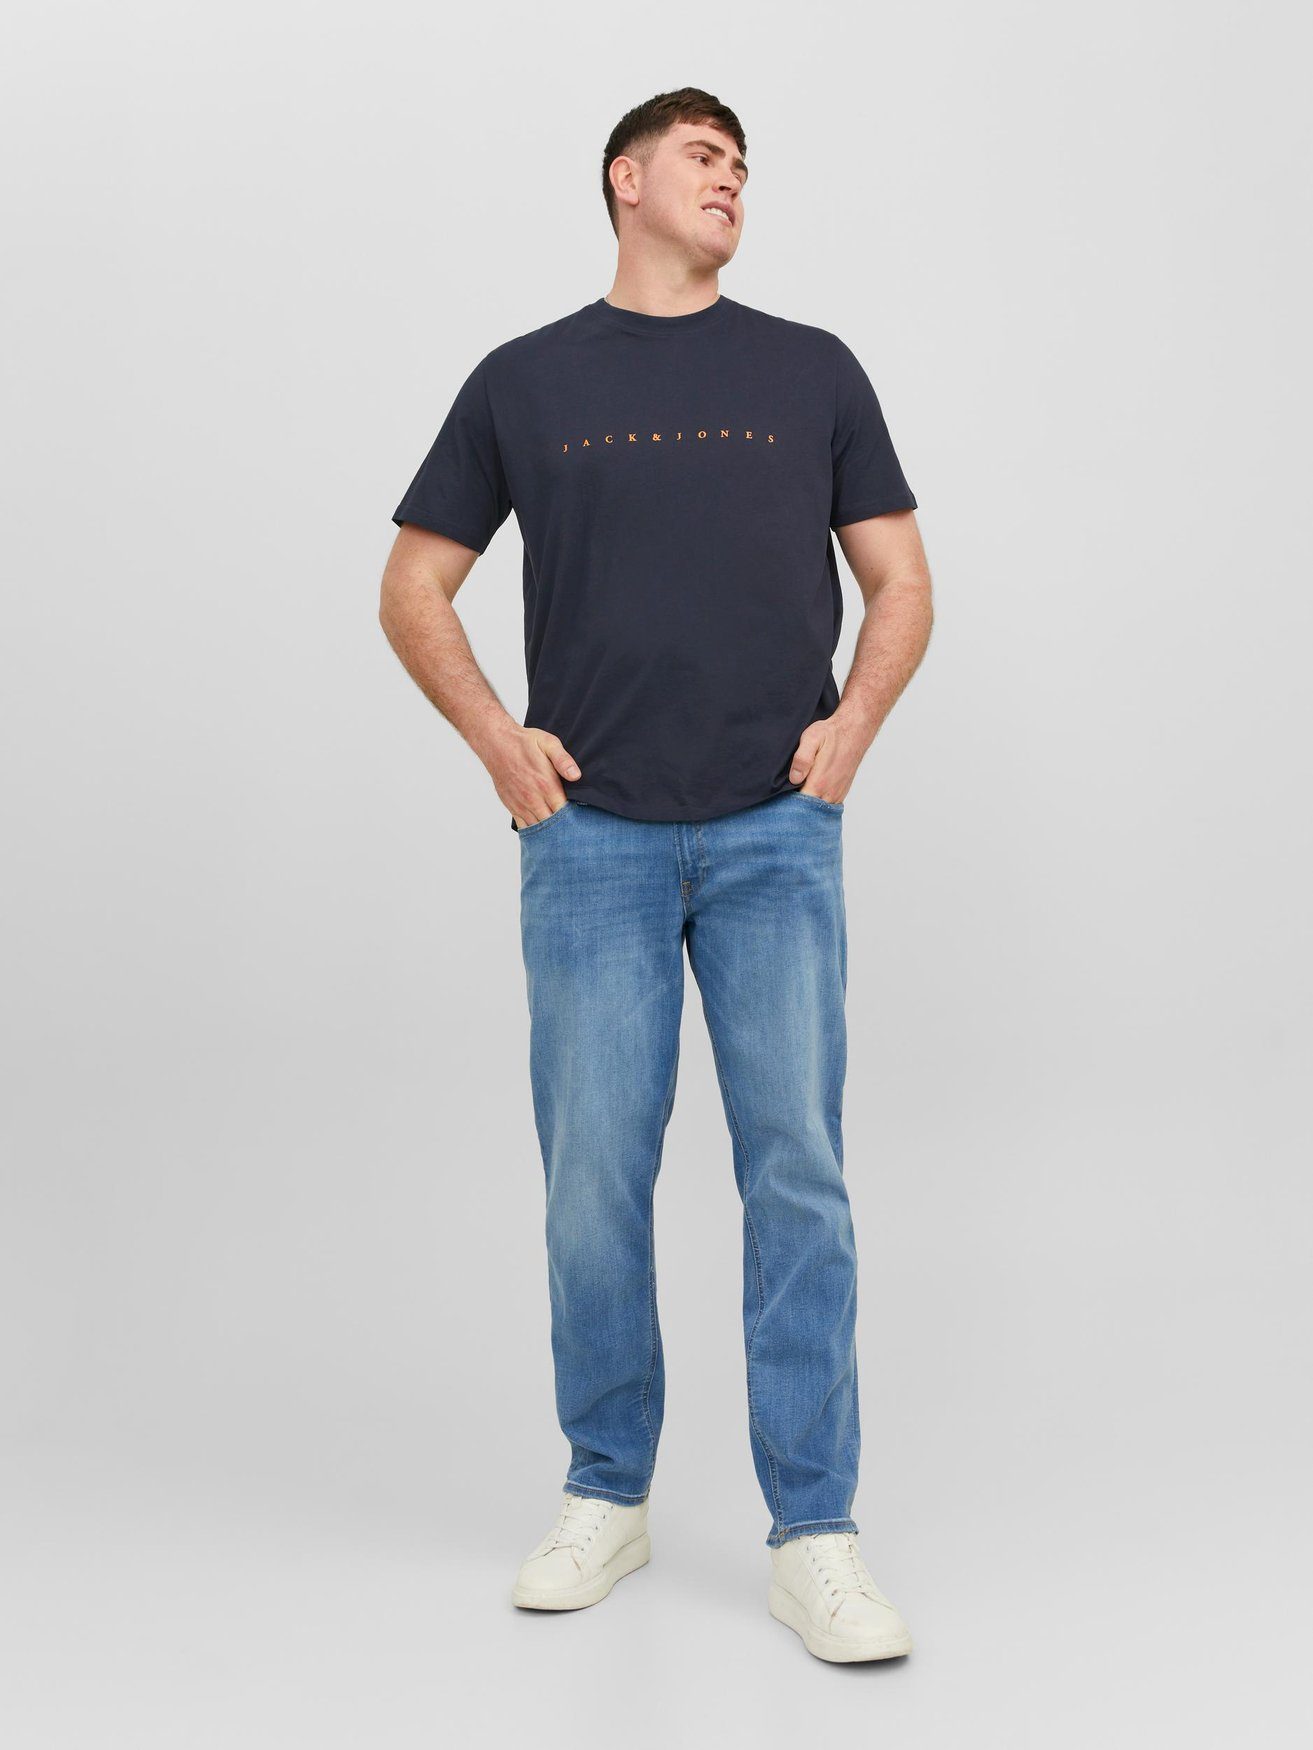 Jack & Jones T-Shirt Logo 6550 Shirt in Dunkelblau JJESTAR Übergröße Size T-Shirt Plus Kurzarm